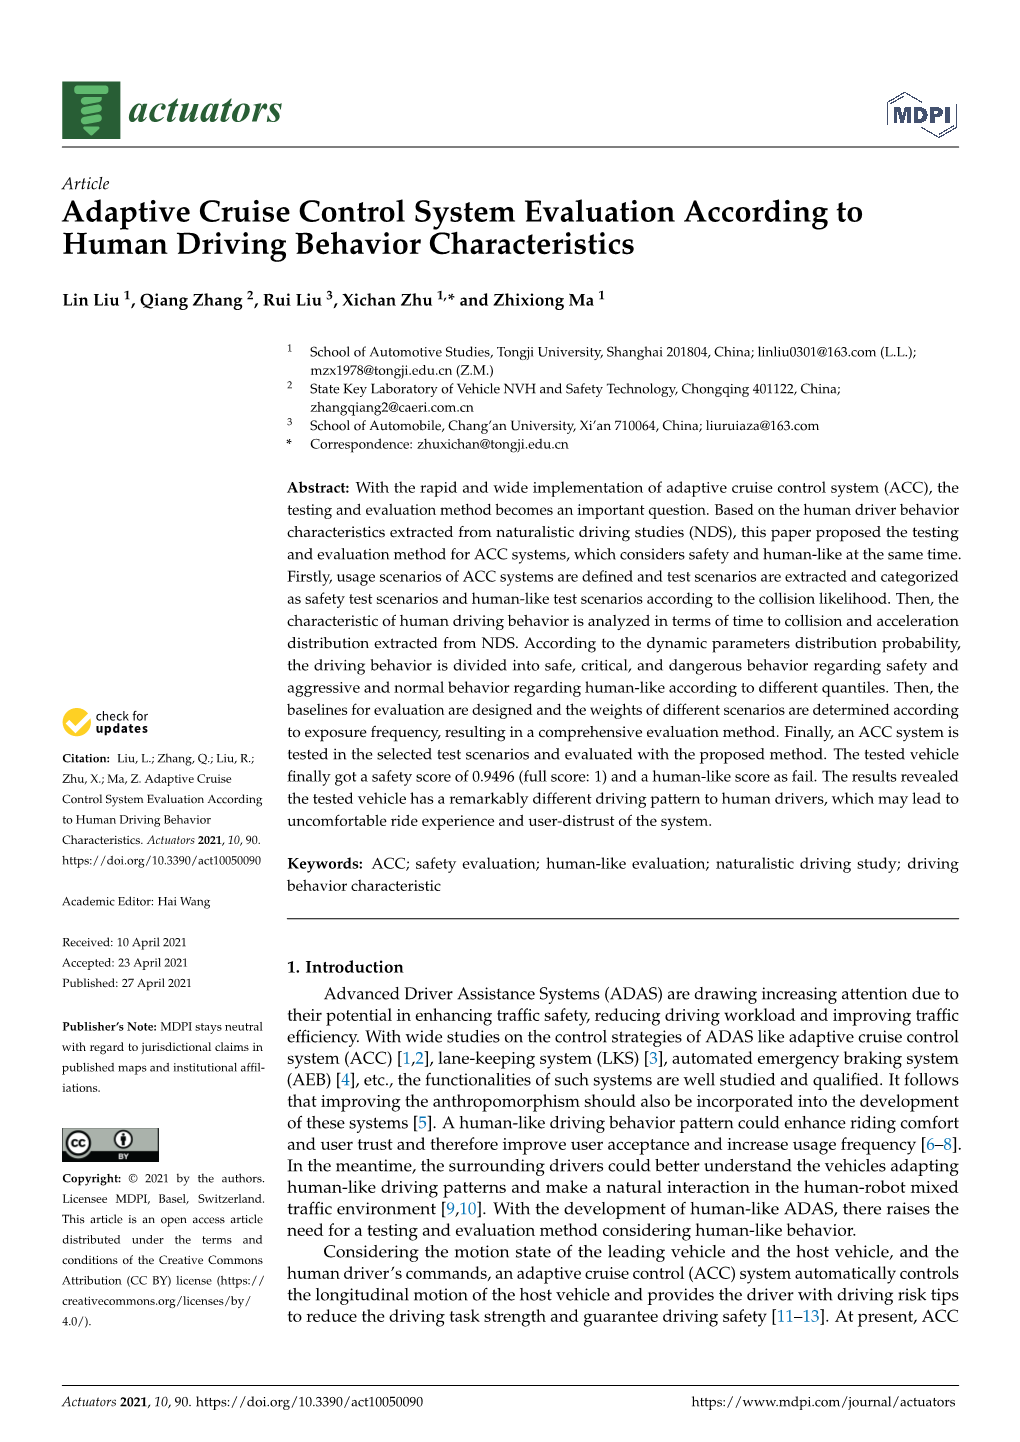 Adaptive Cruise Control System Evaluation According to Human Driving Behavior Characteristics